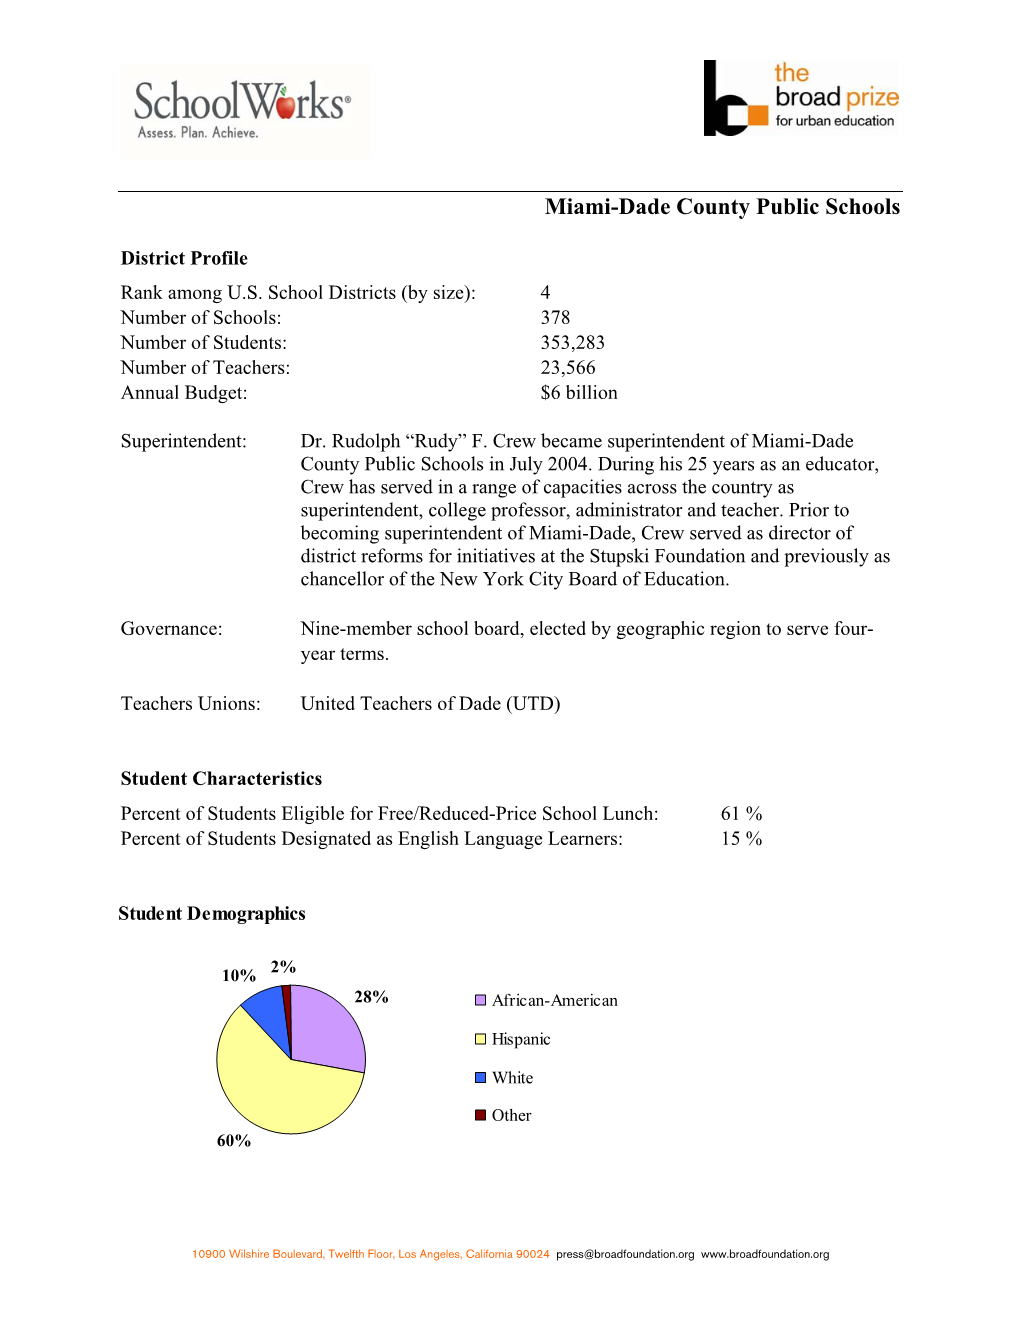 Miami-Dade County Public Schools for Urban Education